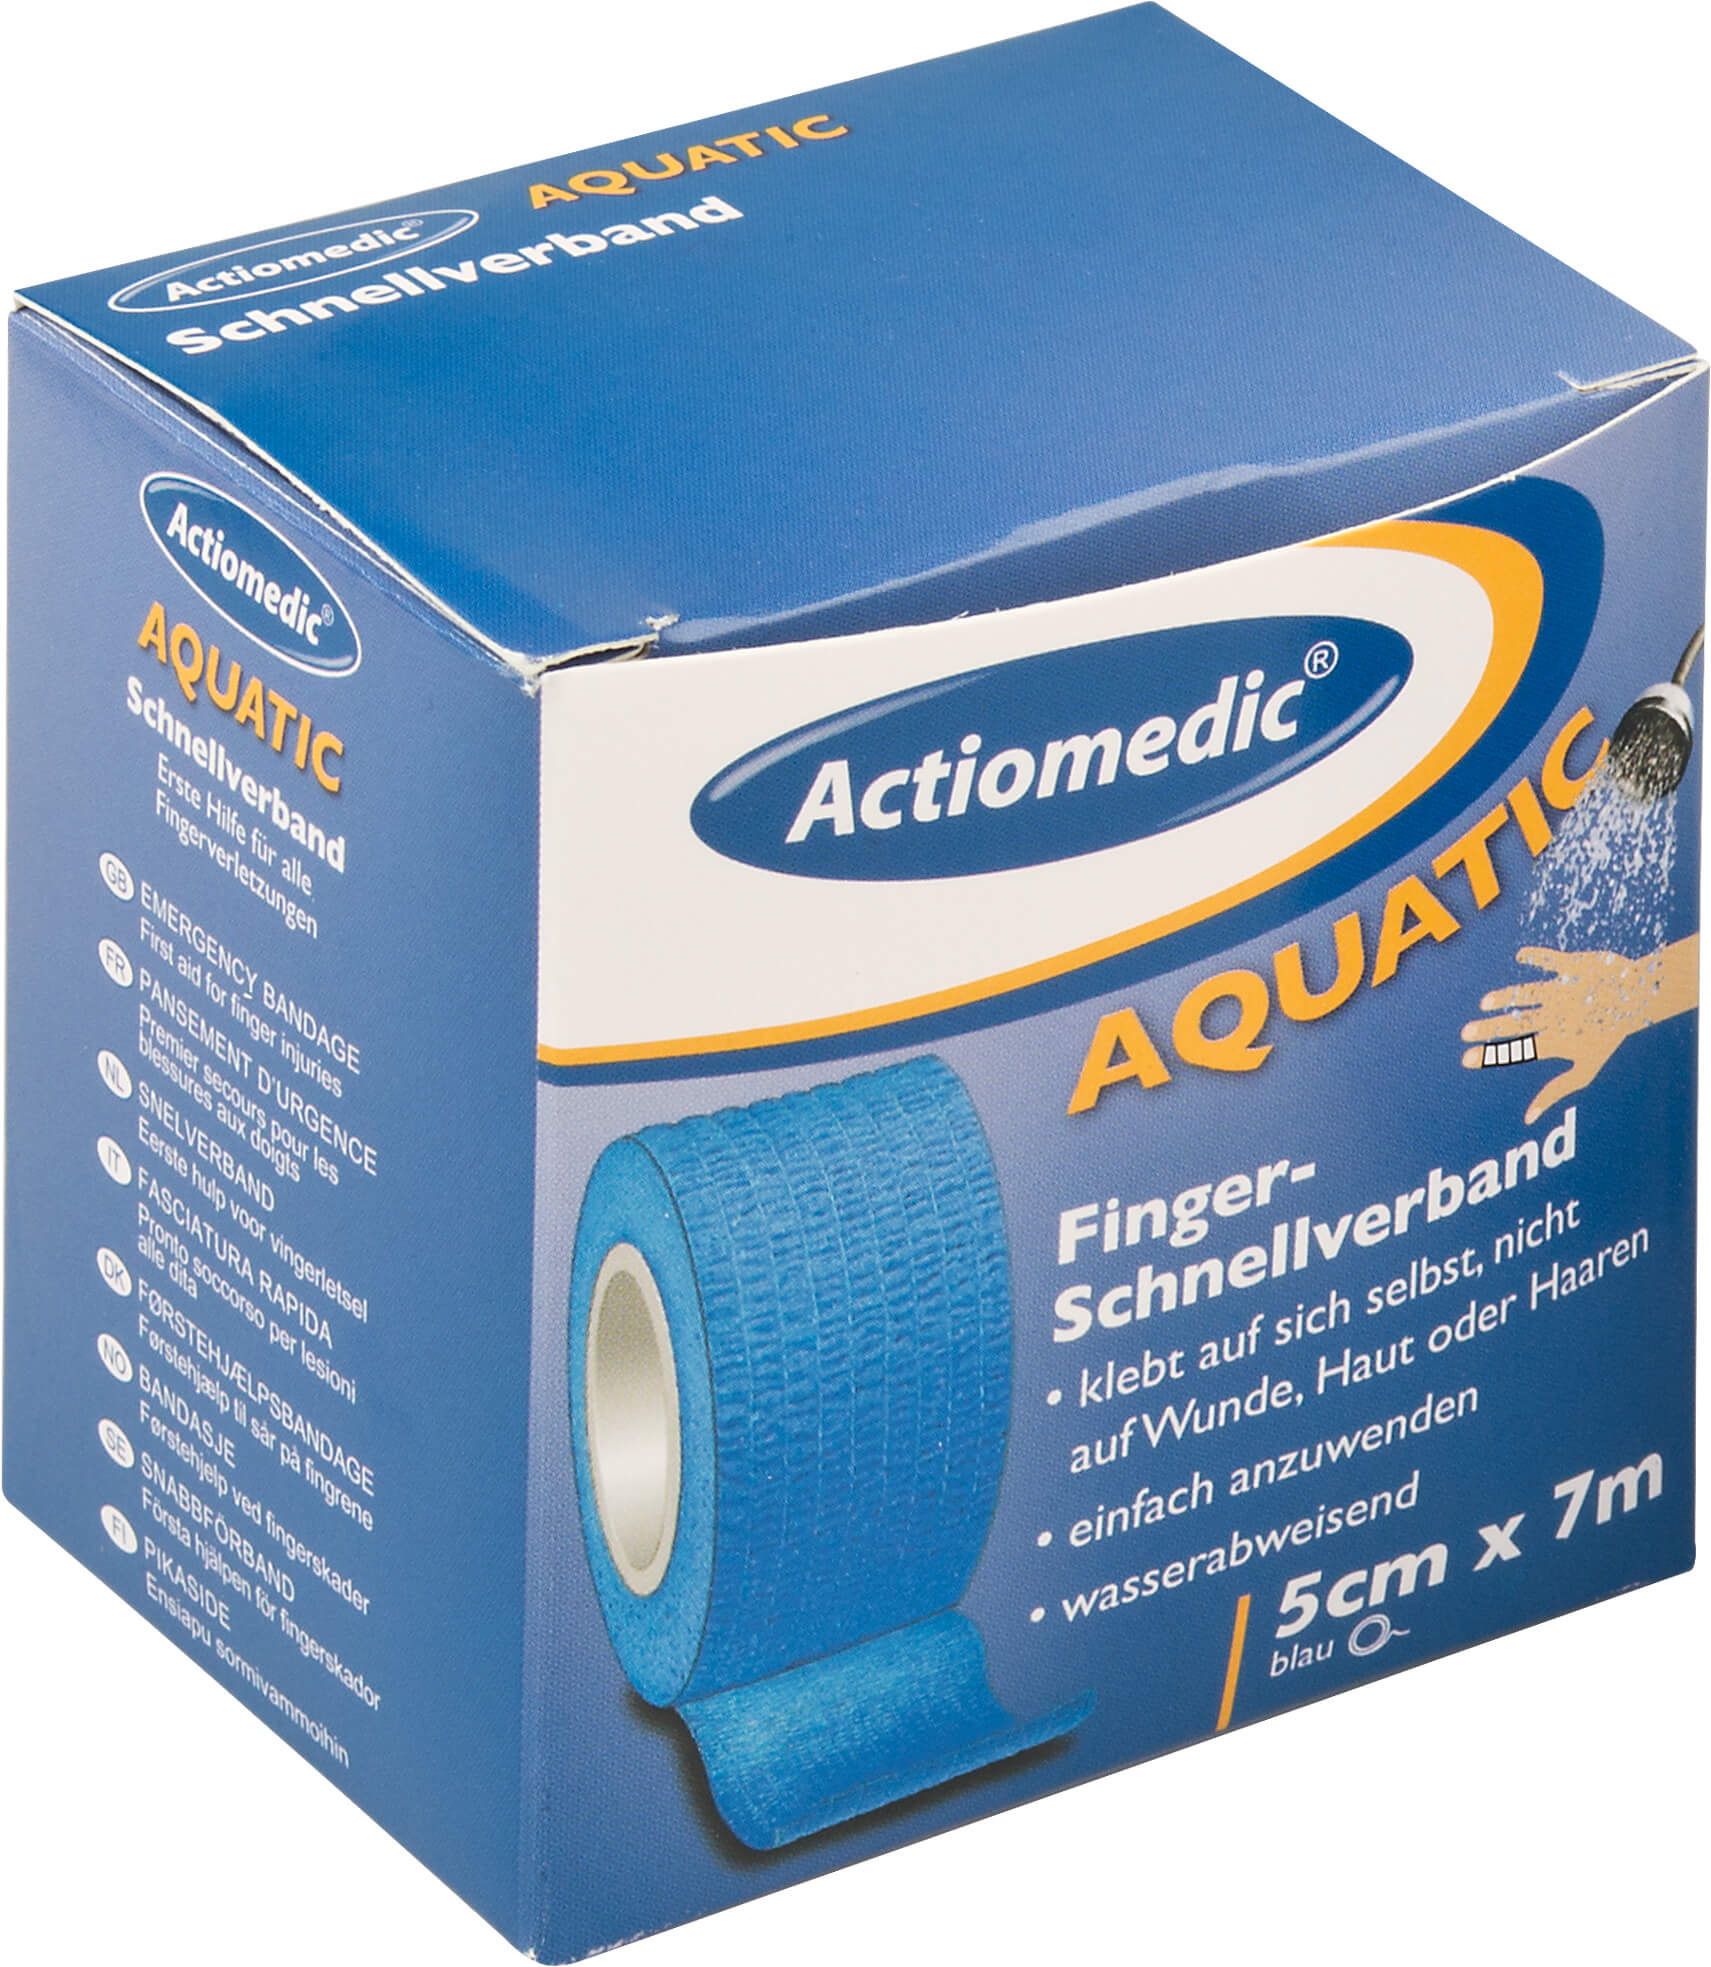 Emergency Bandage, Aquatic - Actiomedic, 5cm x 7m, blue